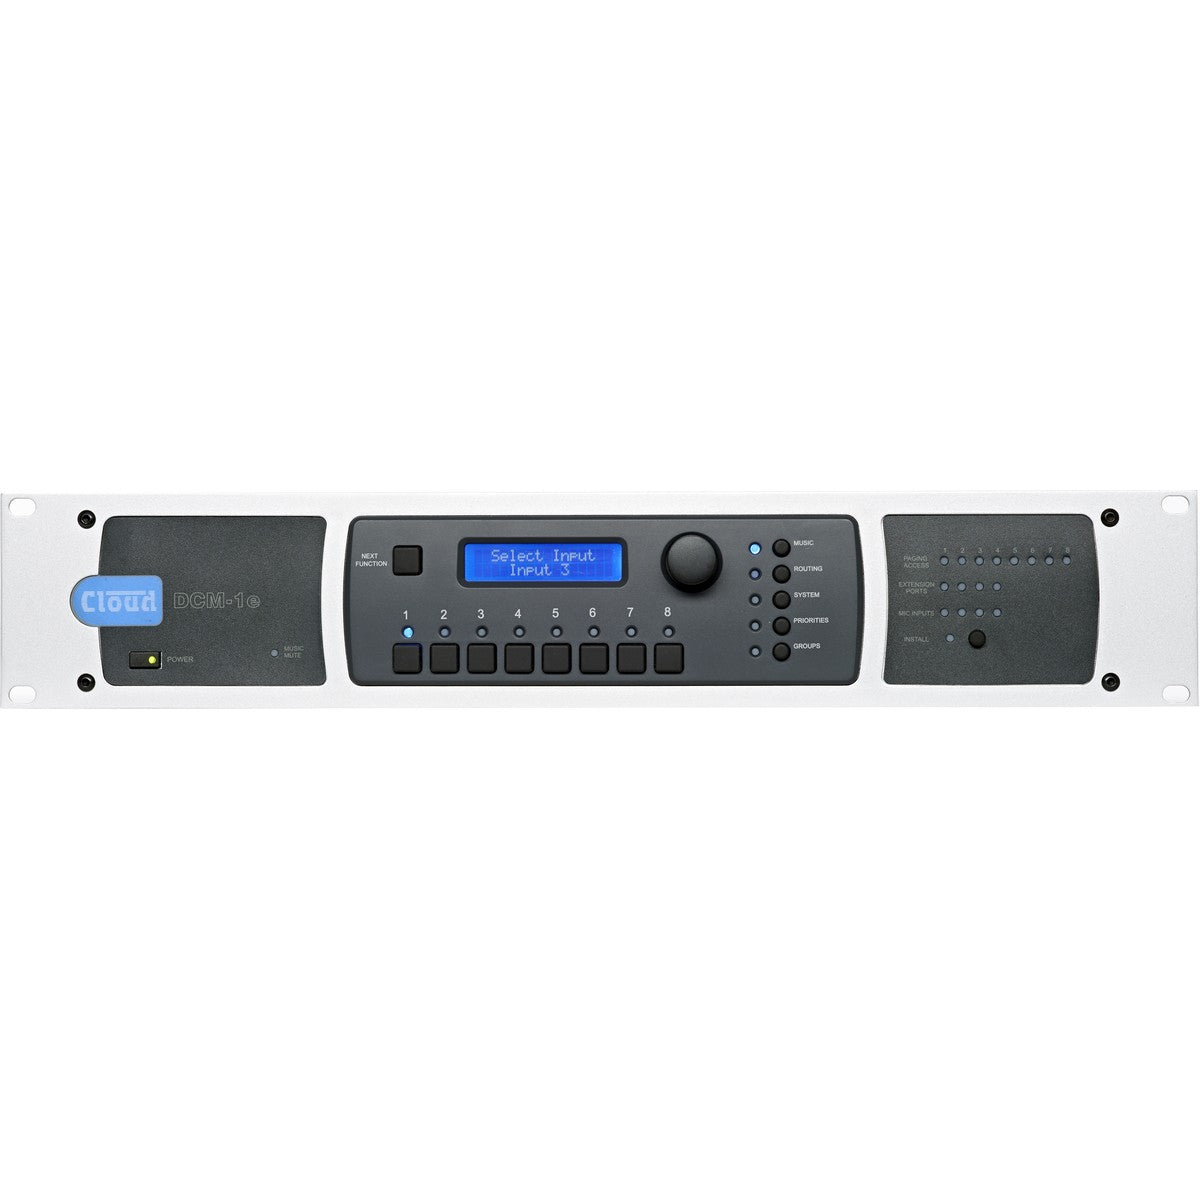 Cloud Electronics DCM1e | Ethernet Digital Control Zone Mixer